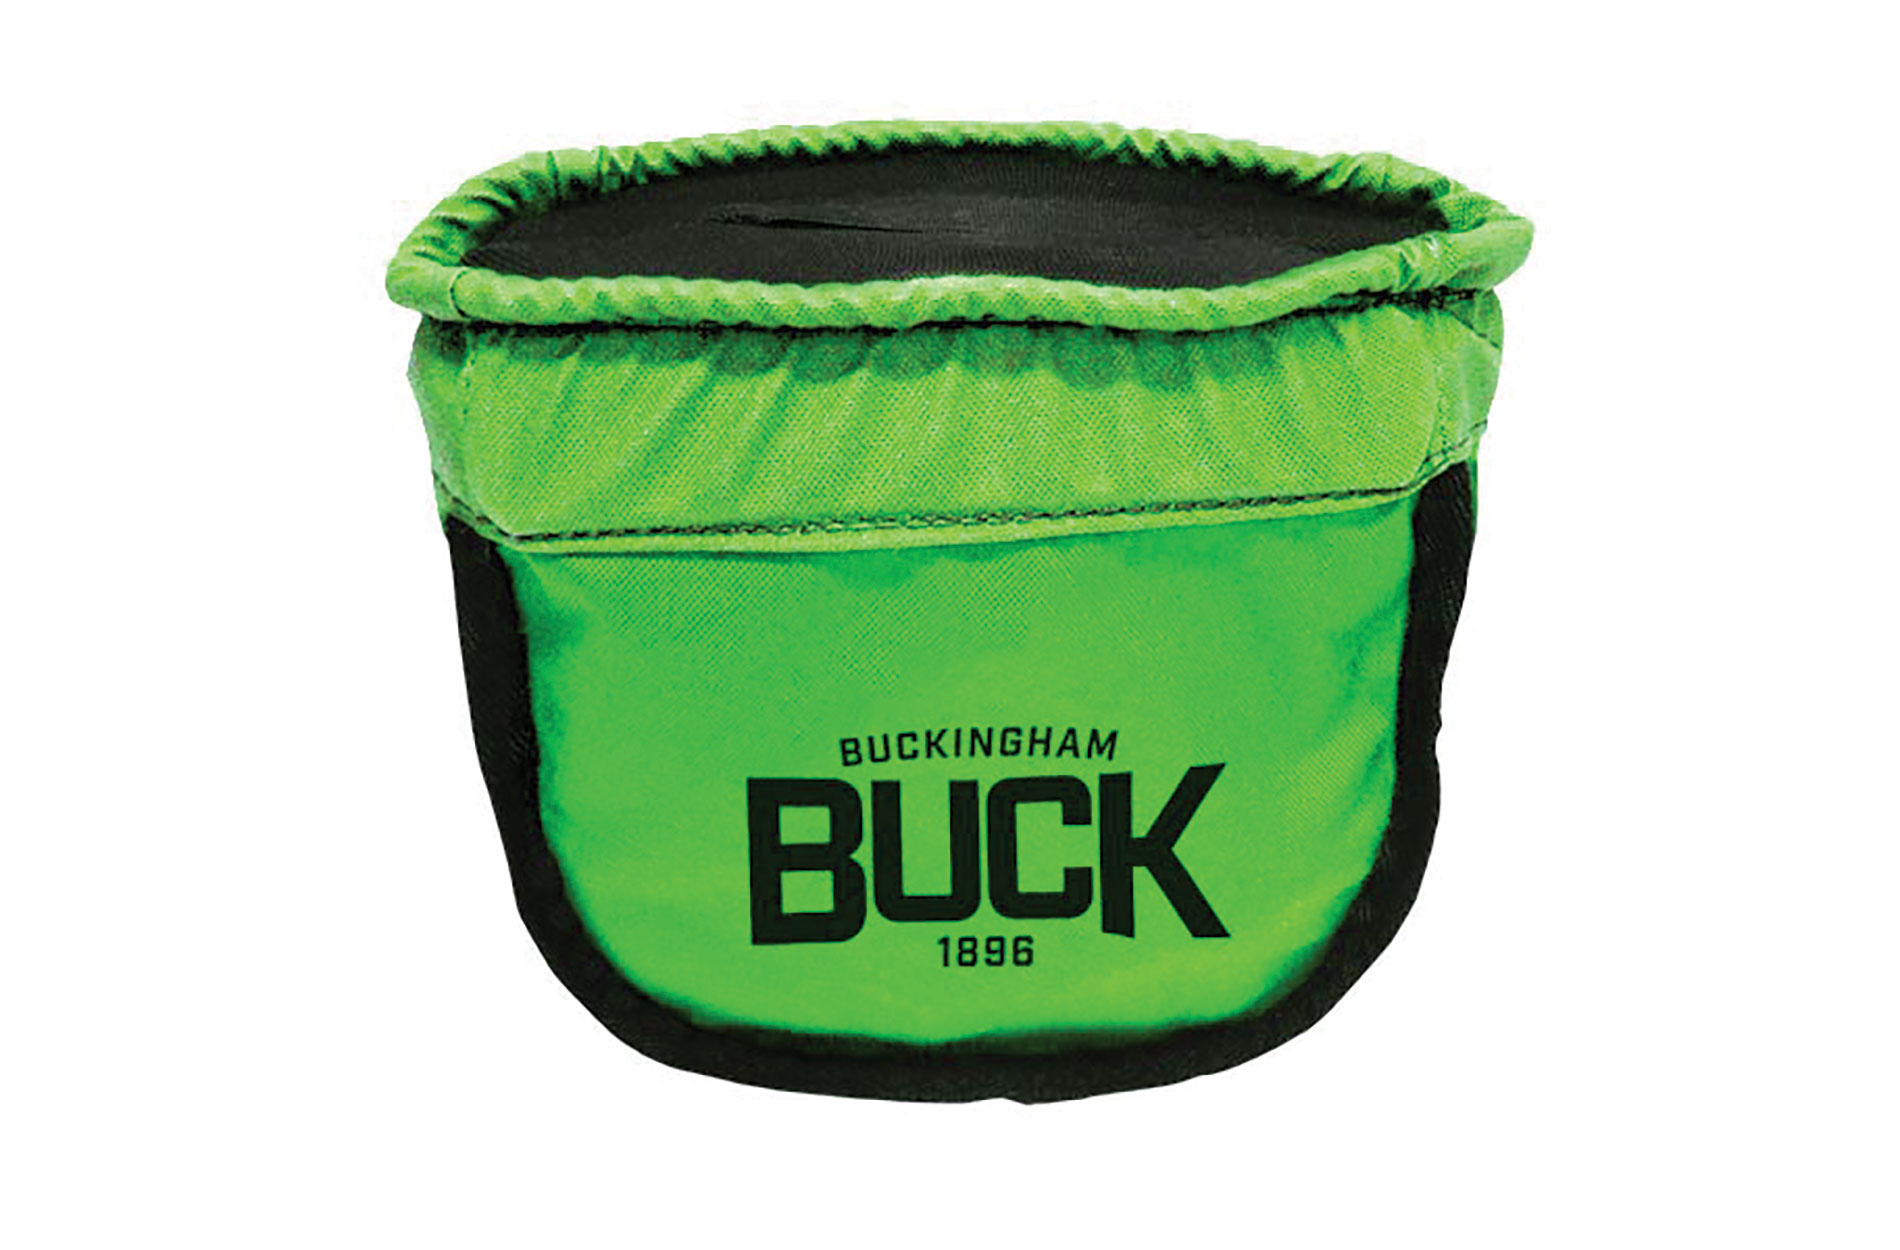 Green and black bag reading Buckingham Buck. Image by Buckingham Manufacturing.